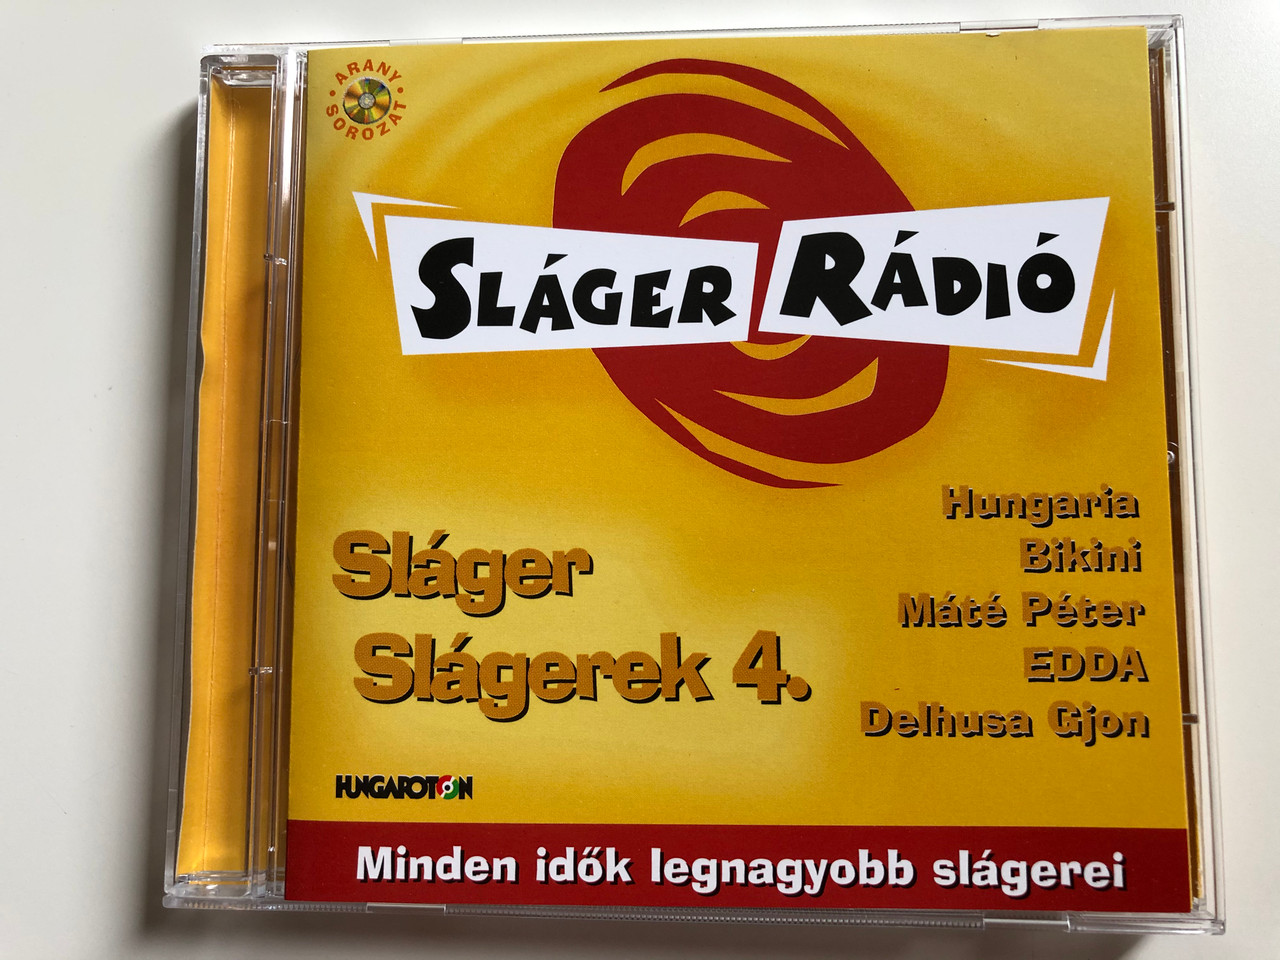 Sláger Radio / Sláger Slágerek 4. / Hungaria, Bikini, Mate Peter, EDDA,  Delhusa Gjon / Minden idok legnagyobb slagerei / Hungaroton Audio CD 2000 /  HCD 71031 - Bible in My Language